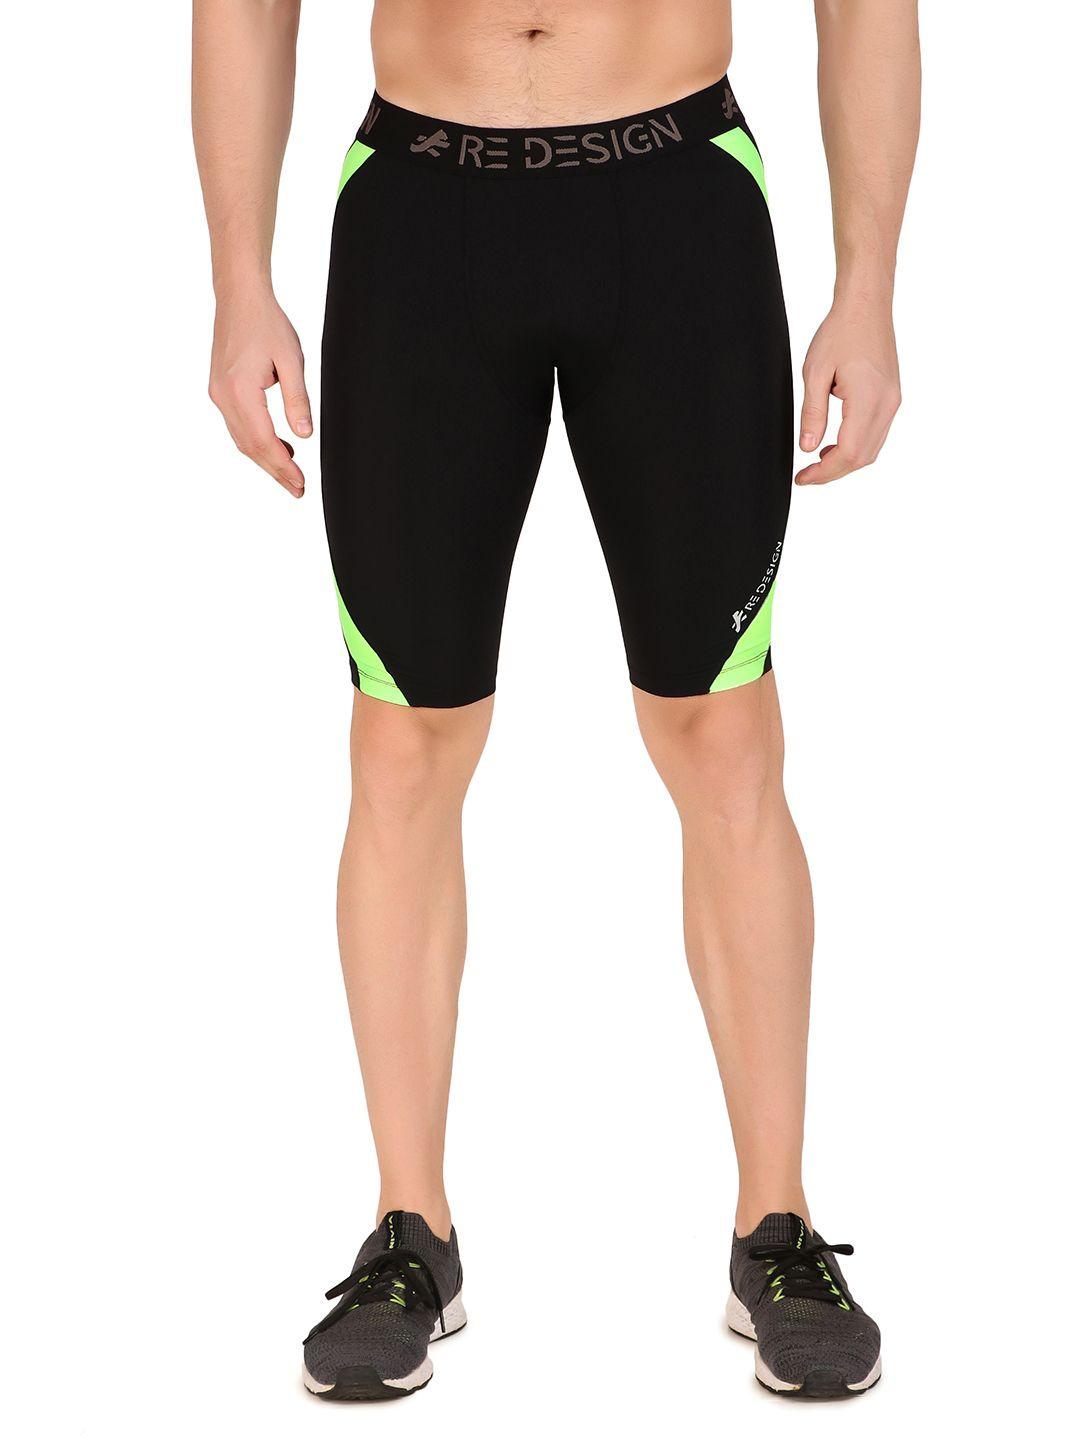 redesign men slim-fit above knee-length gym tights shorts